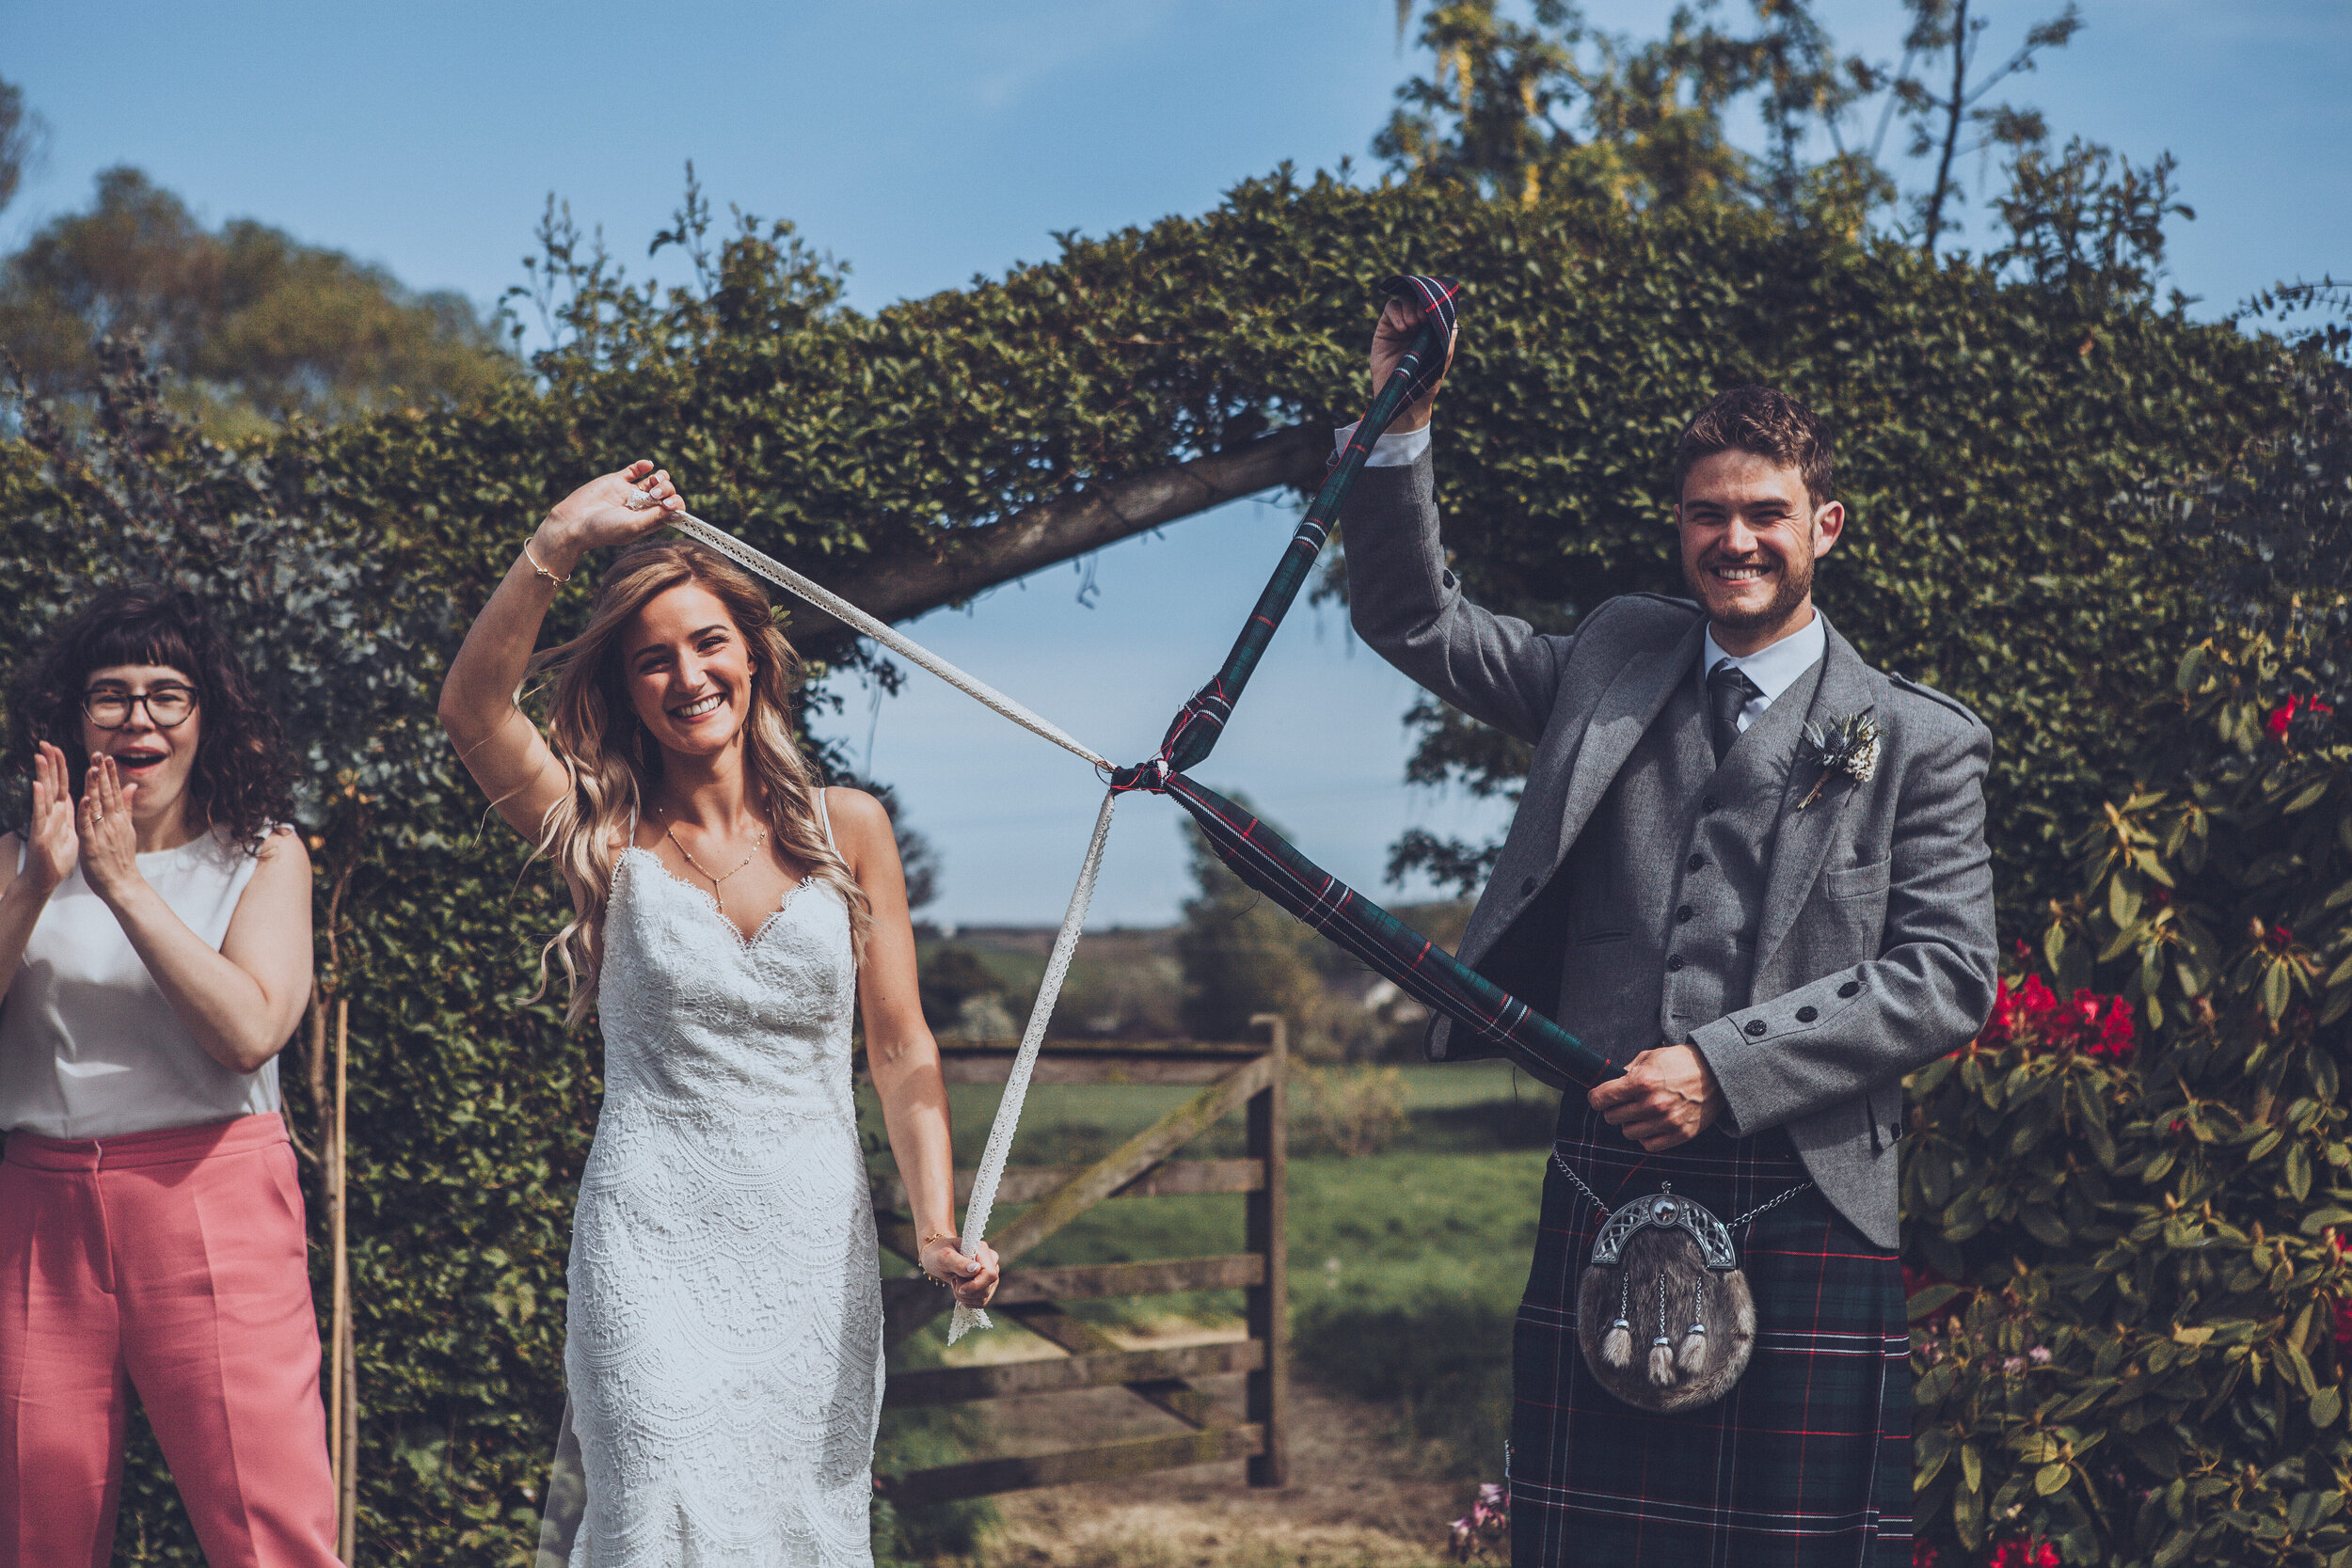 Dalduff Farm Ayrshire Wedding Photography - Claire Basiuk Photographer - 09.jpg